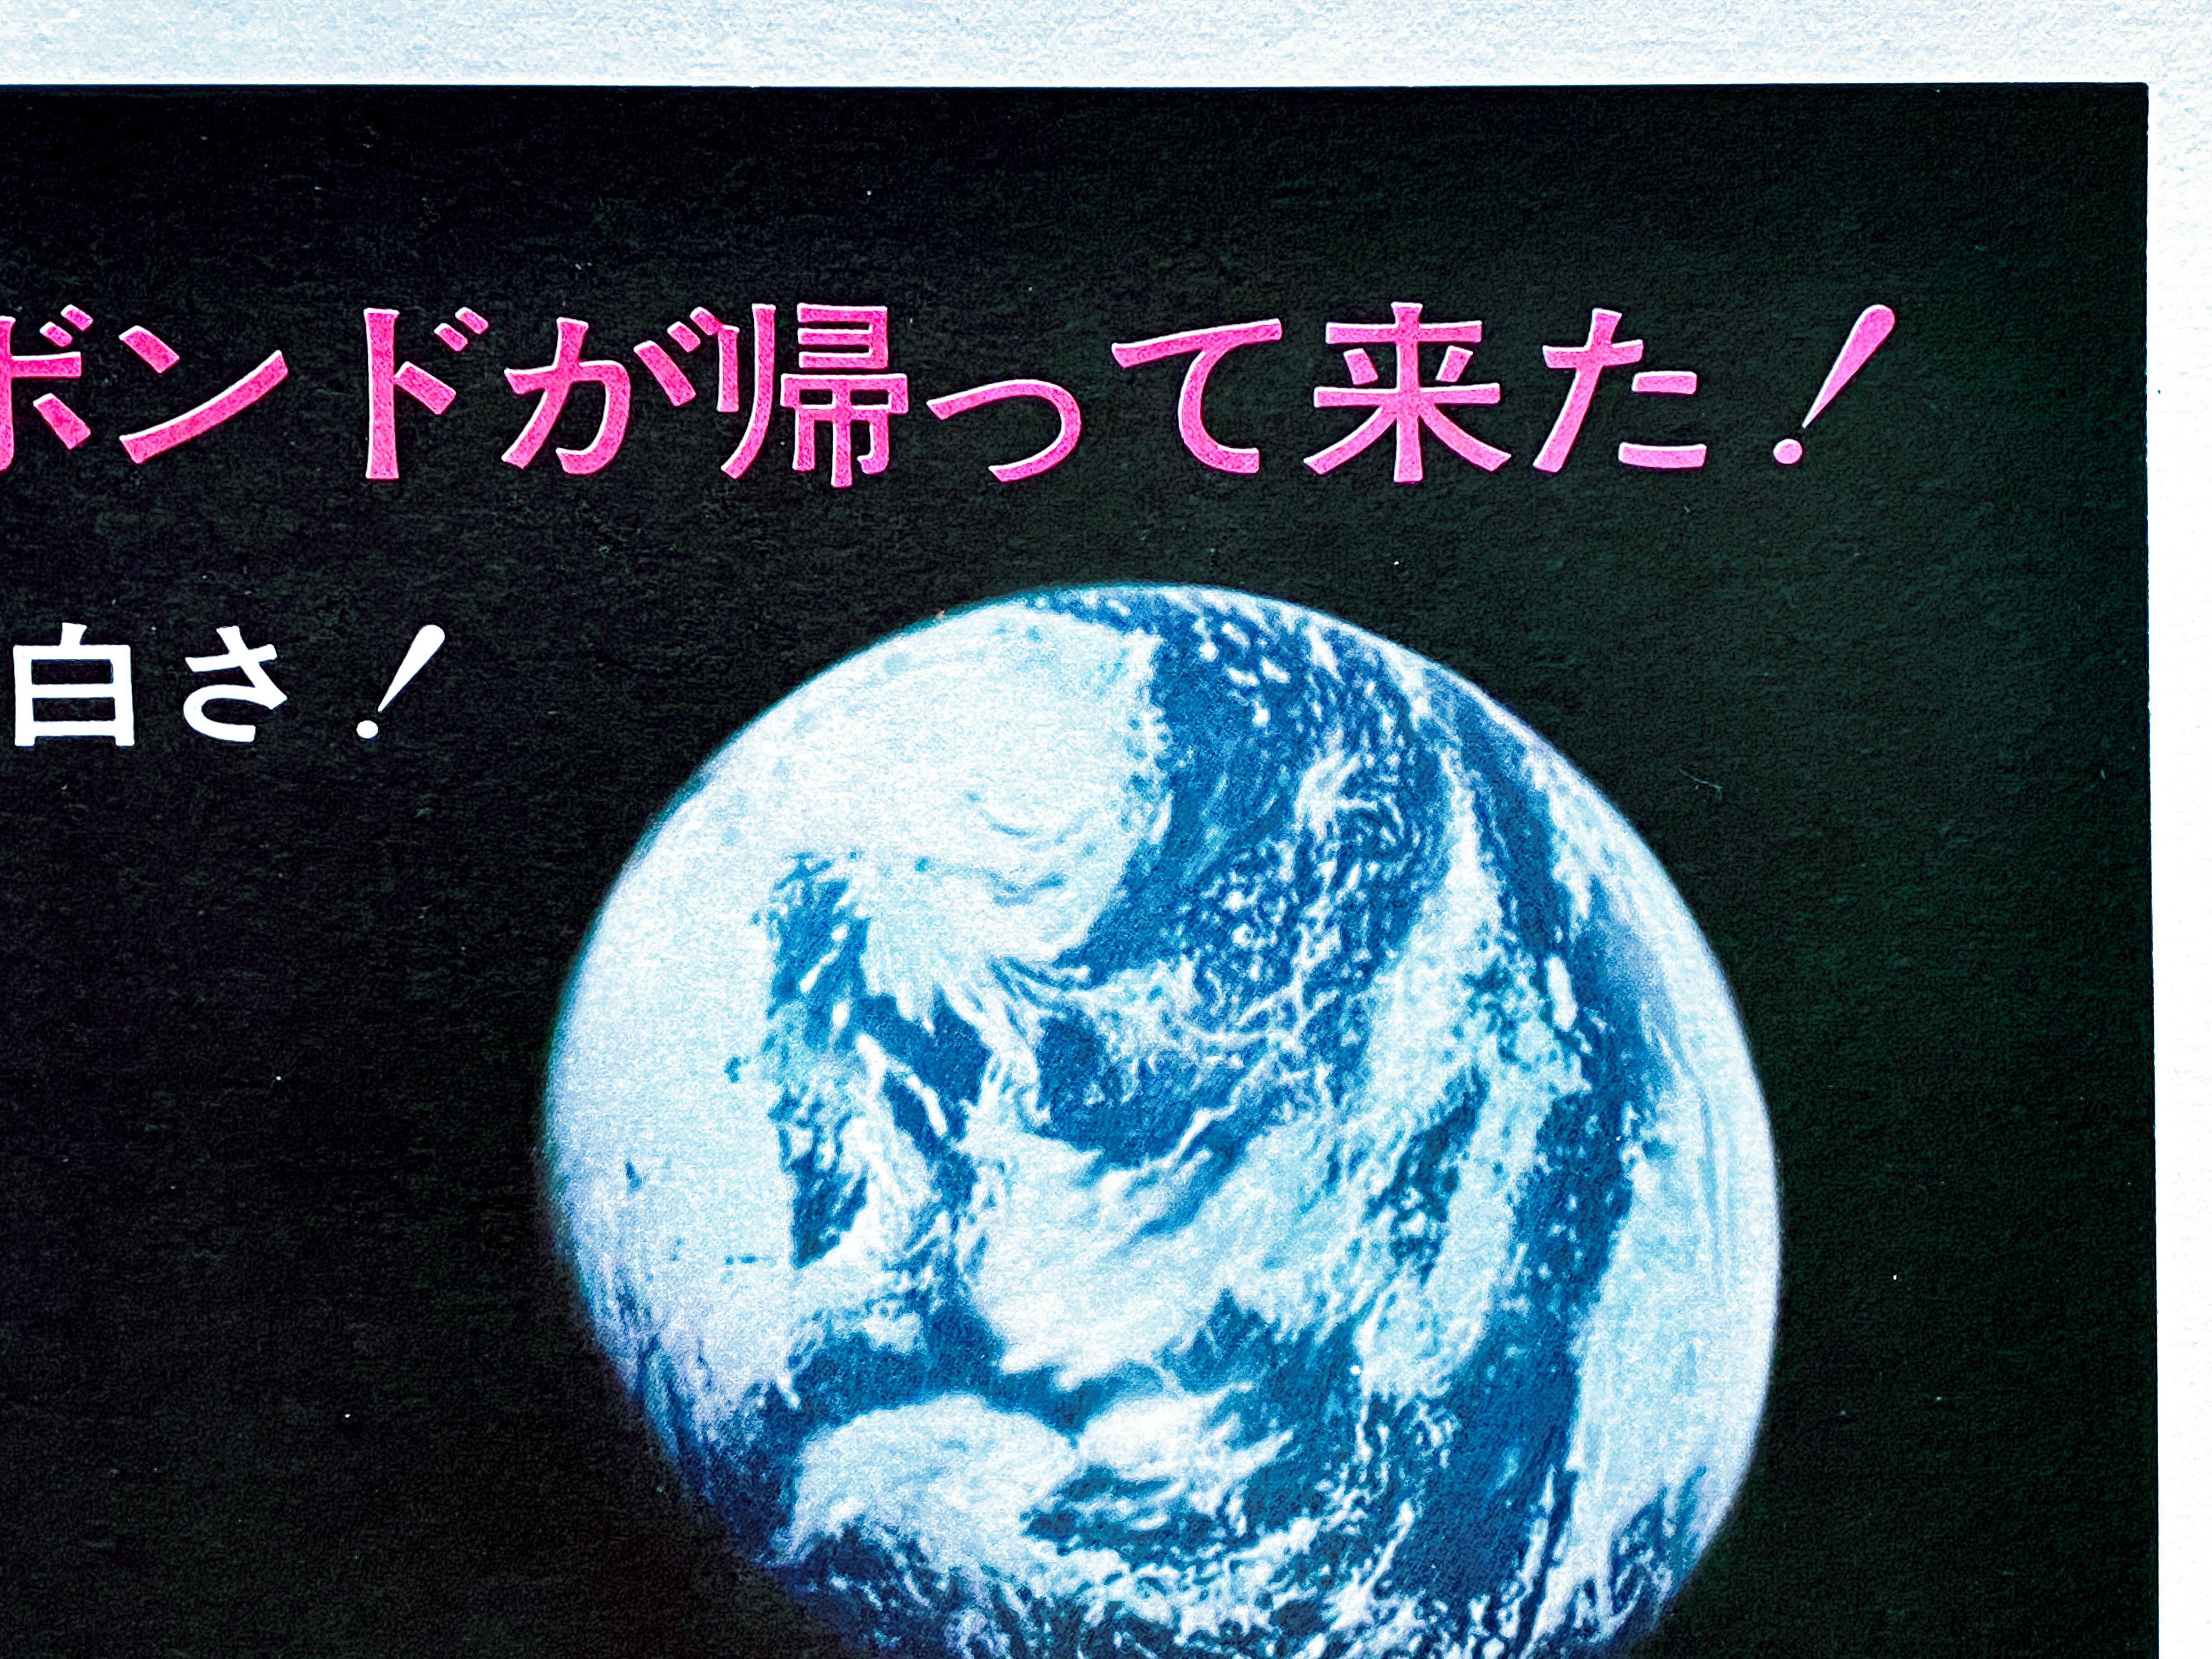 James Bond 'Diamonds Are Forever' Original Vintage Japanese Movie Poster, 1971 For Sale 4